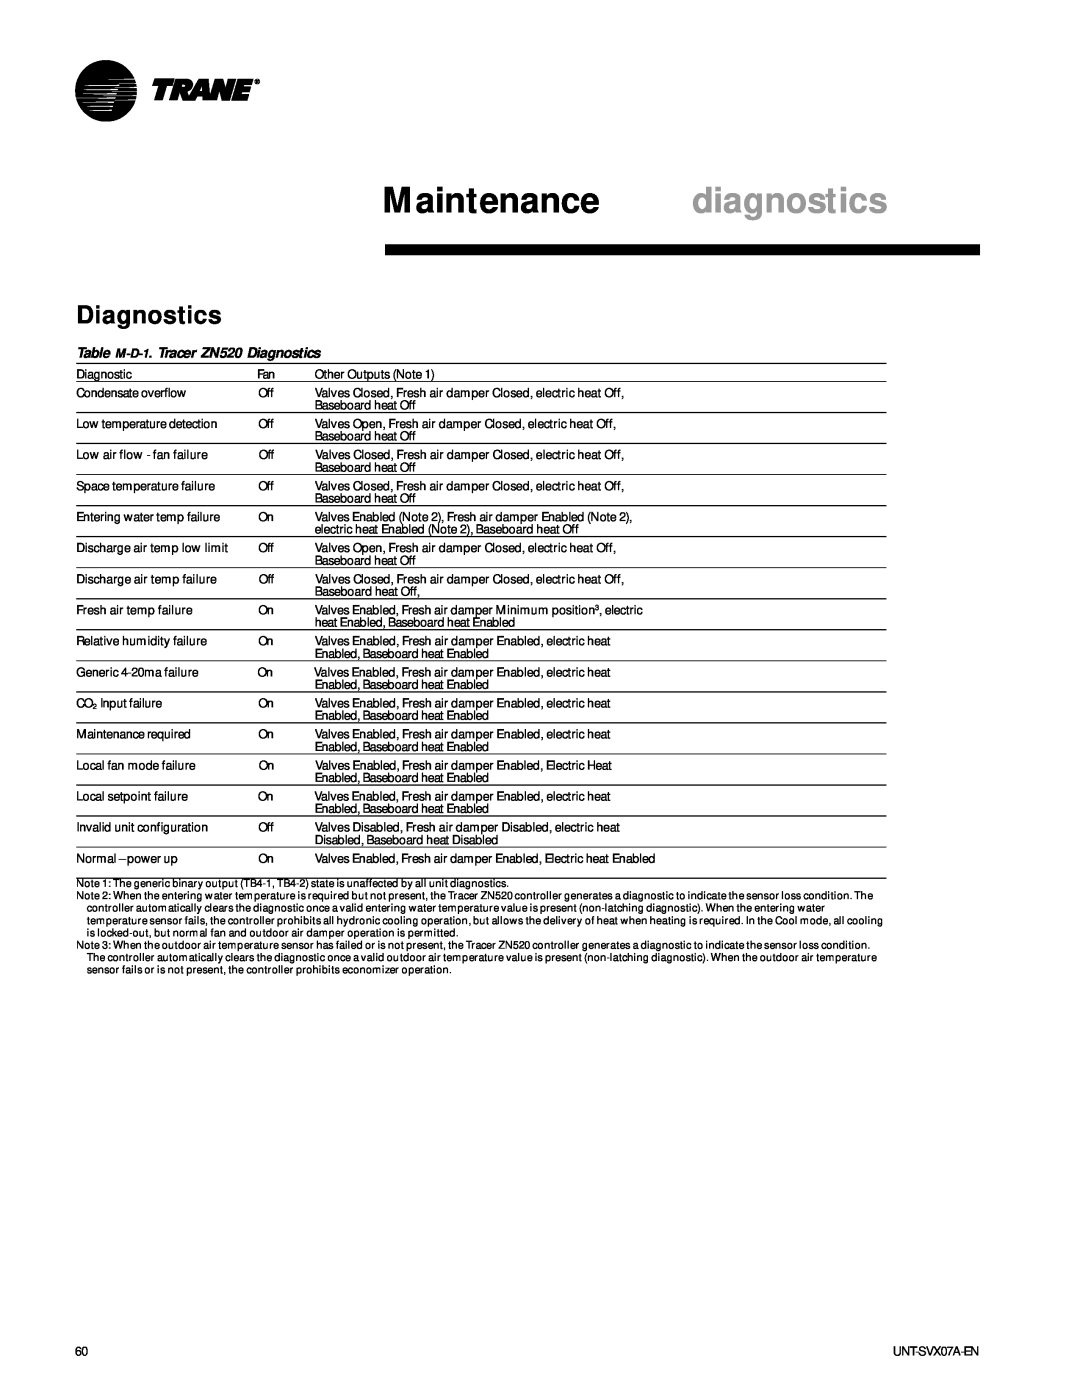 Trane UNT-SVX07A-EN manual Maintenance diagnostics, Table M-D-1. Tracer ZN520 Diagnostics 